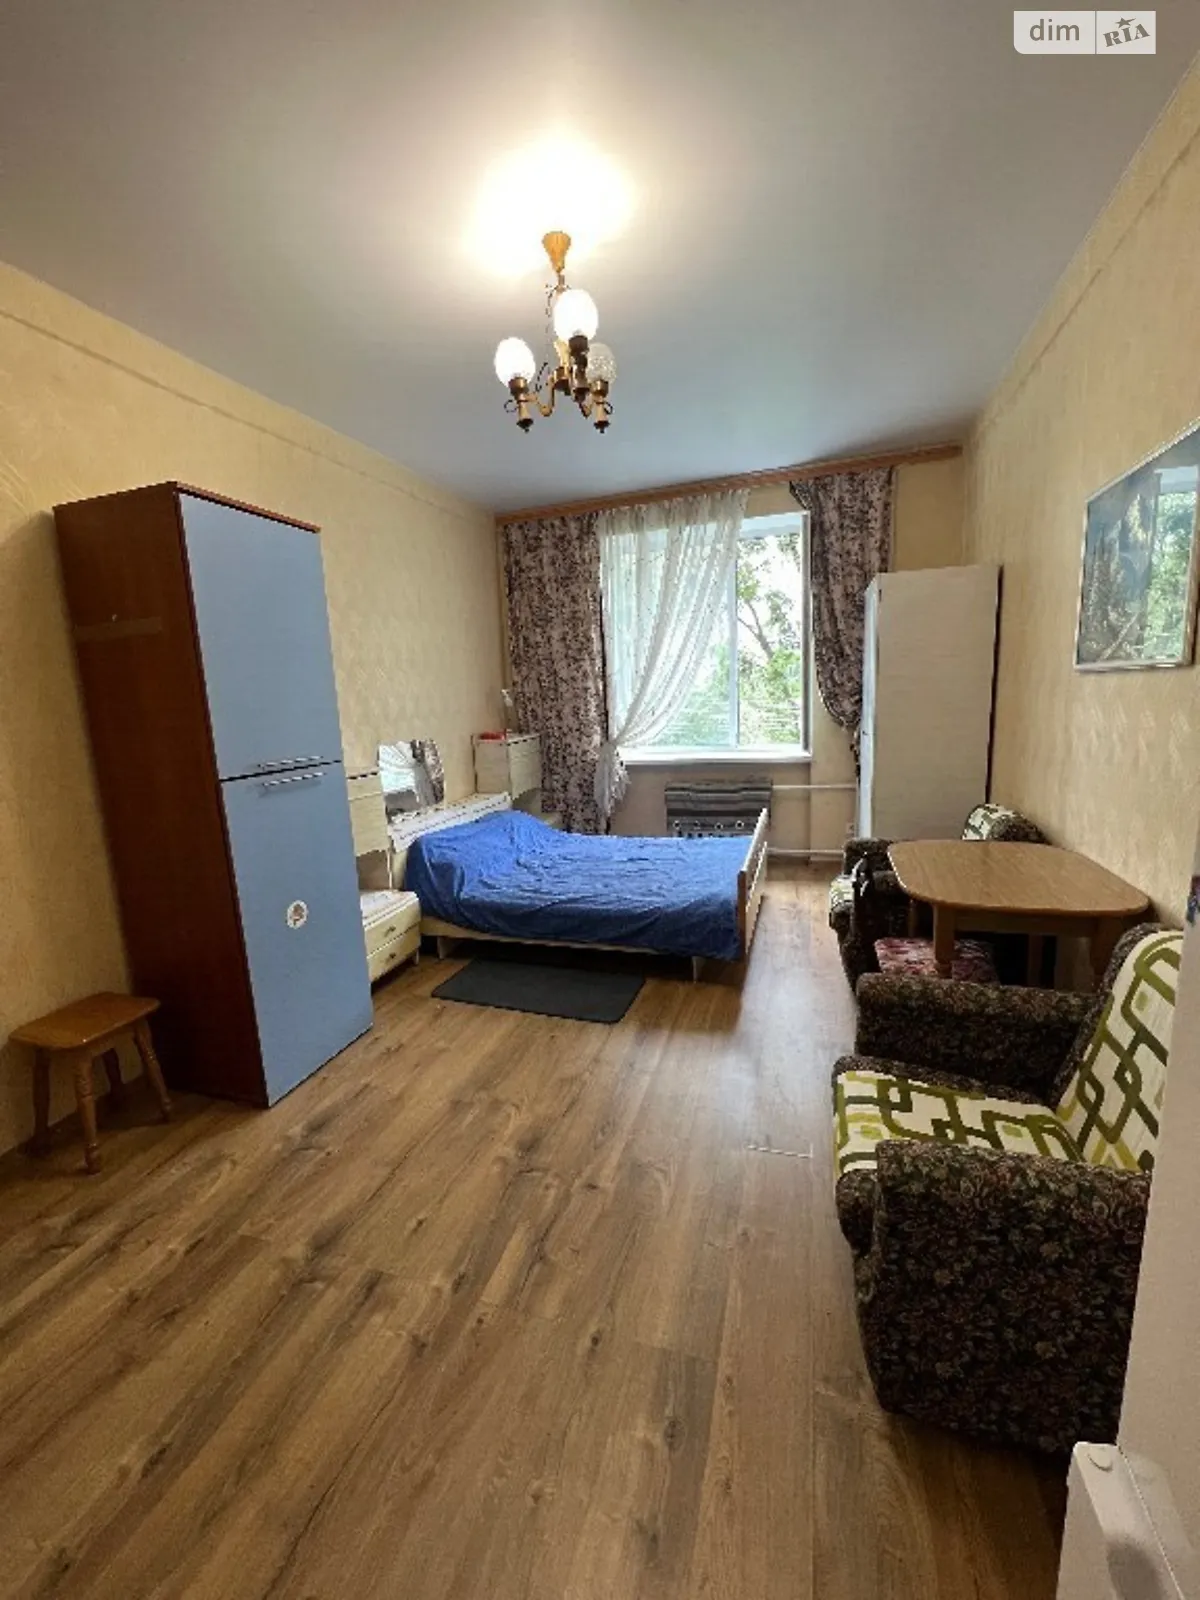 Продается комната 28.17 кв. м в Киеве, цена: 21000 $ - фото 1